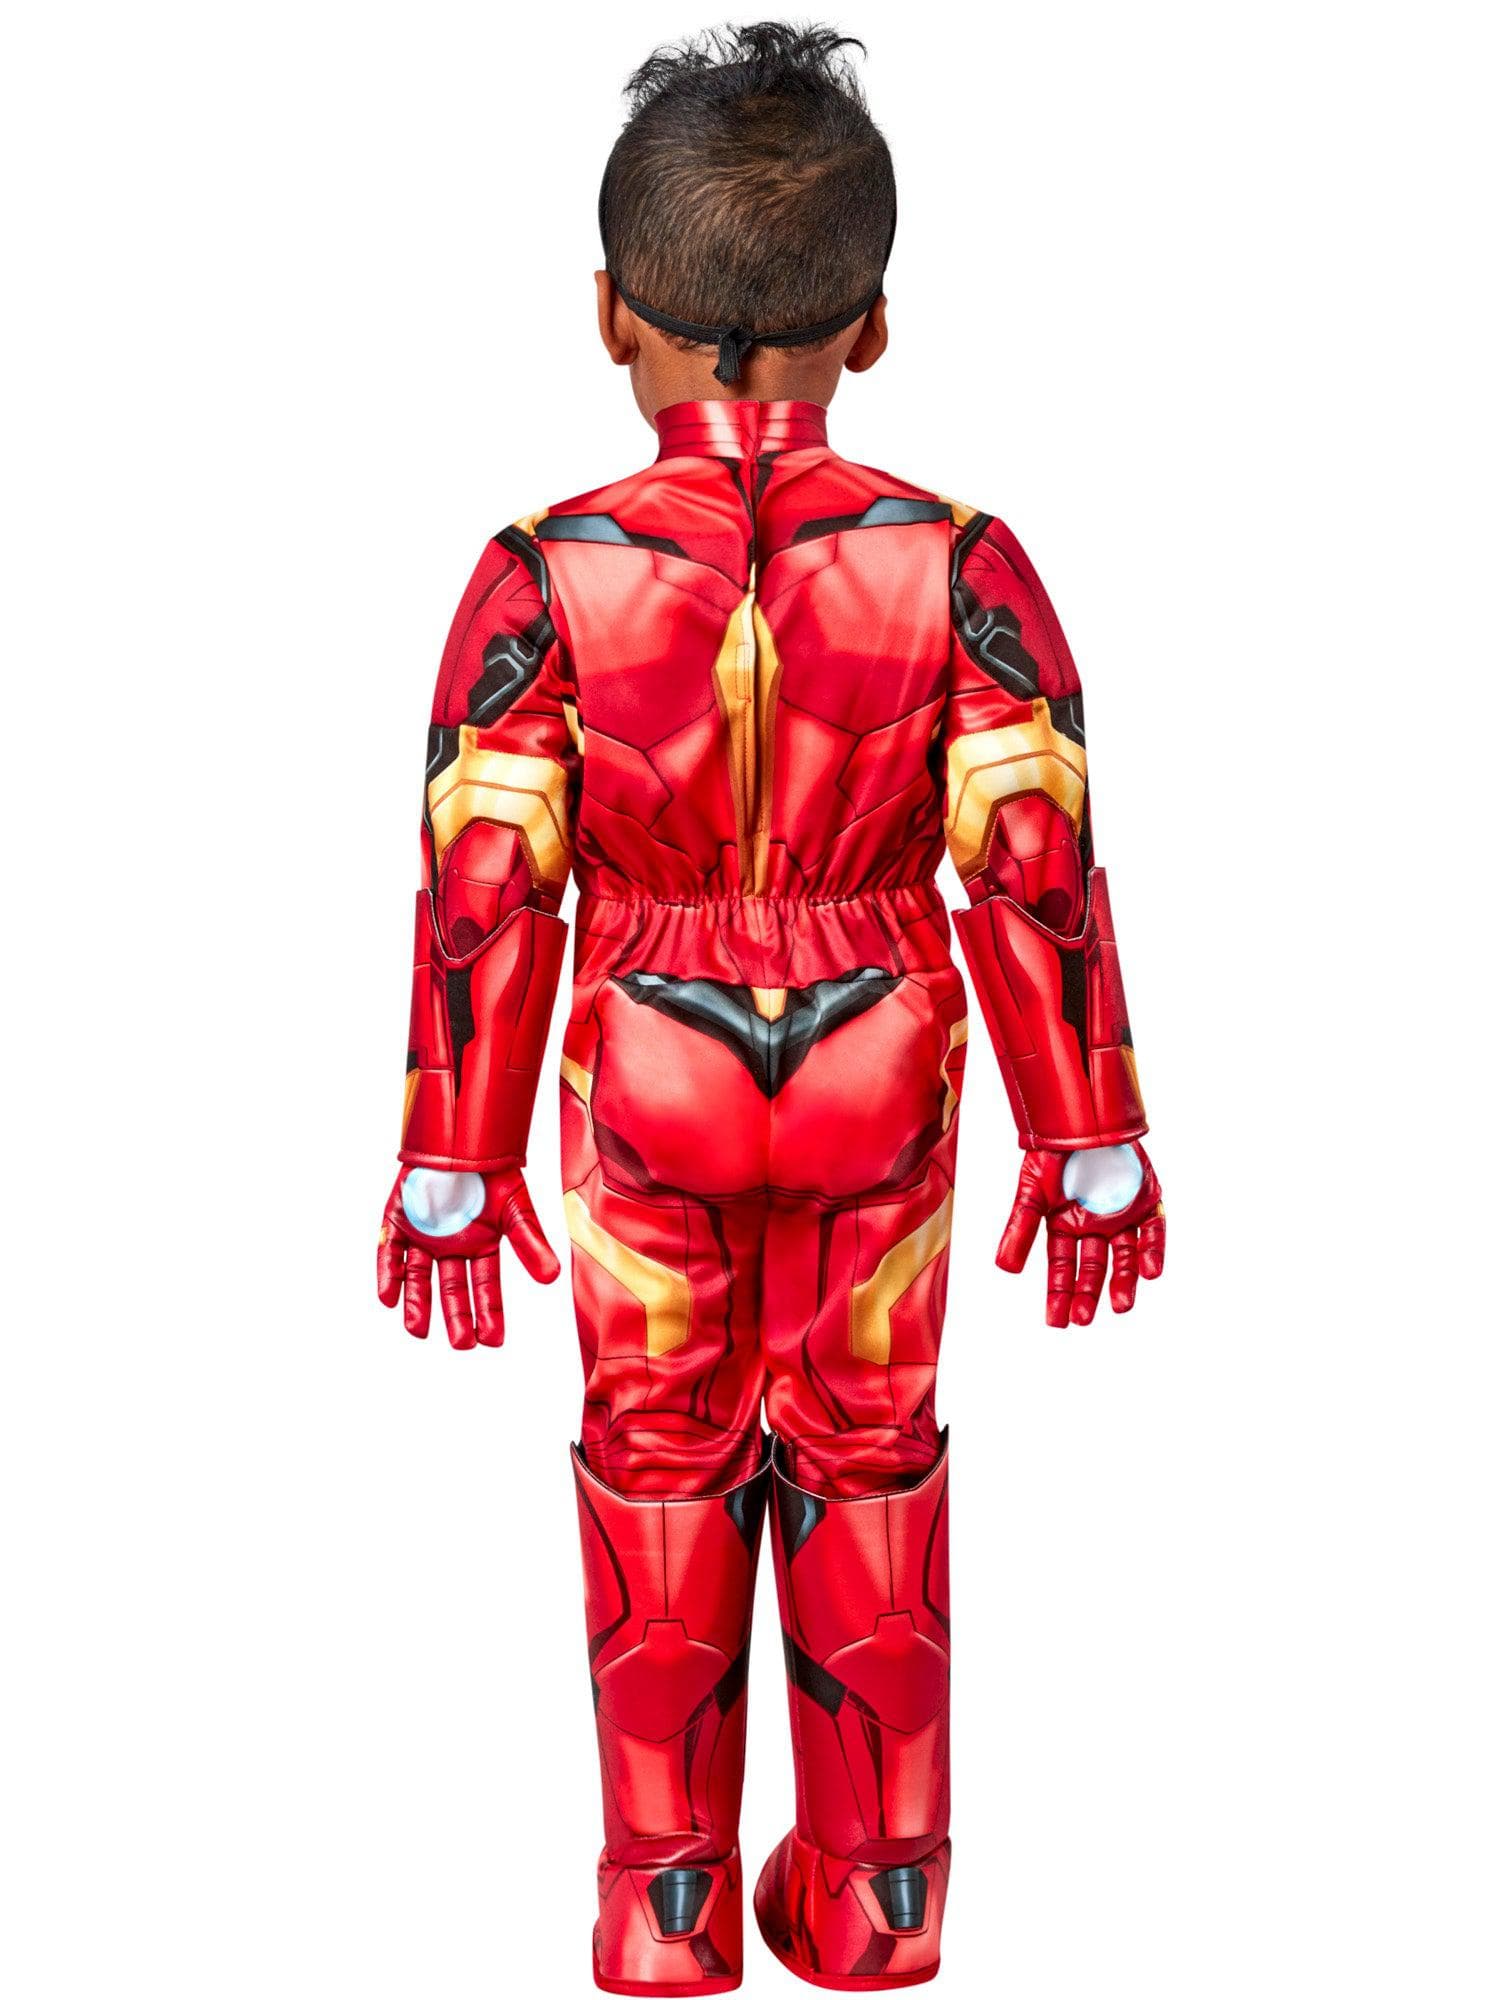 Iron Man Toddler Costume - costumes.com